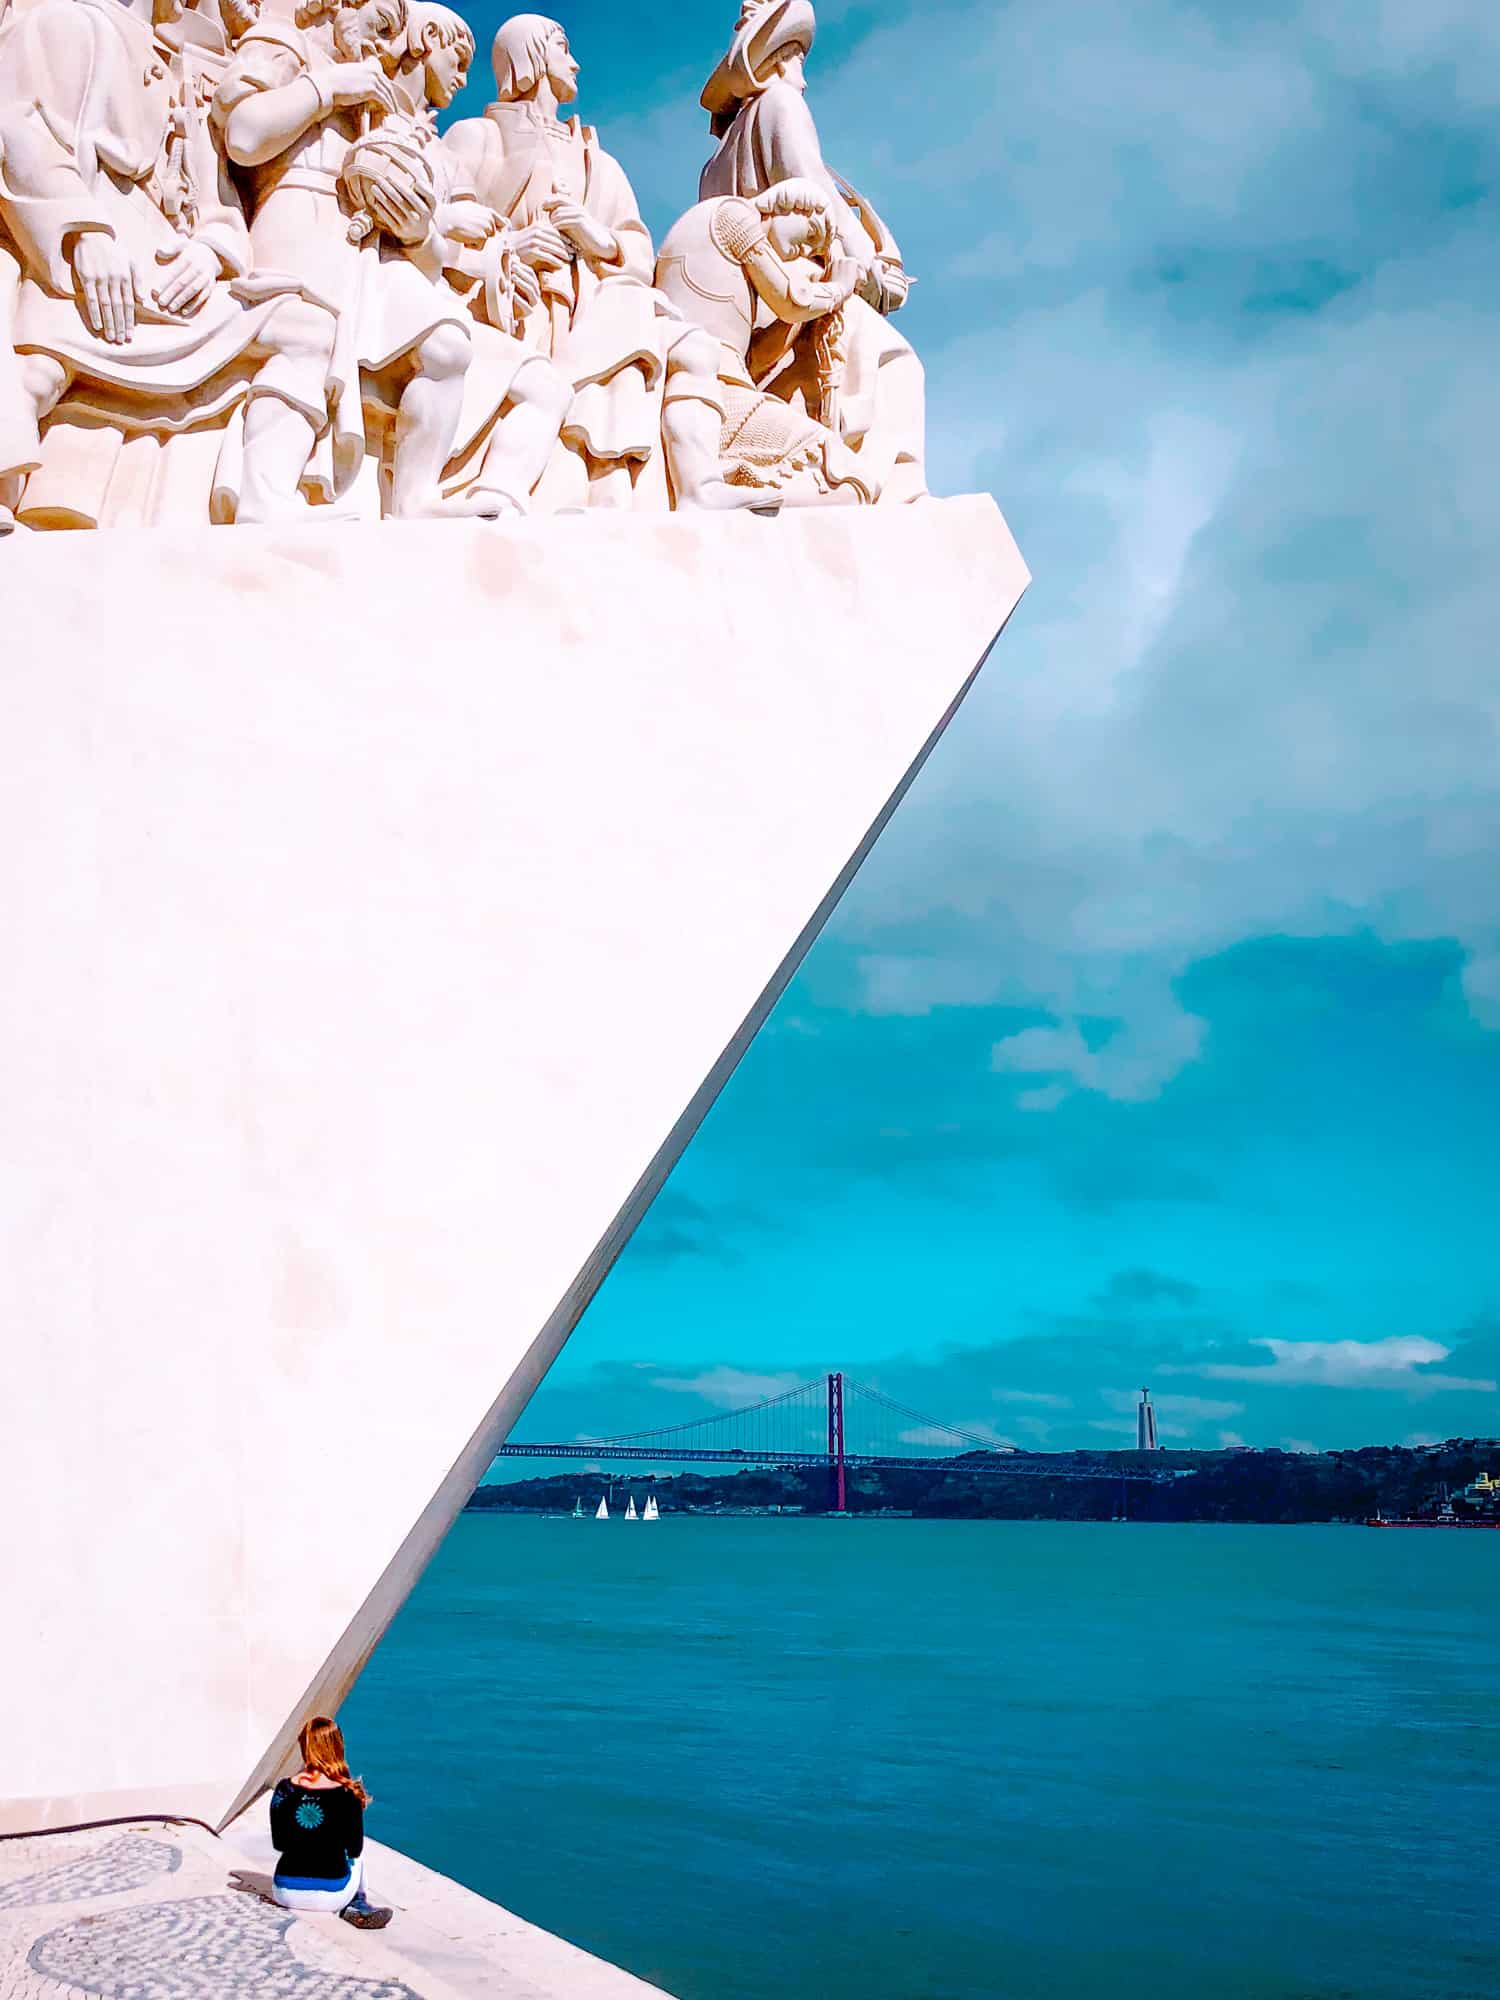 Portugal - Lisbon - Belem - Discoveries Monument